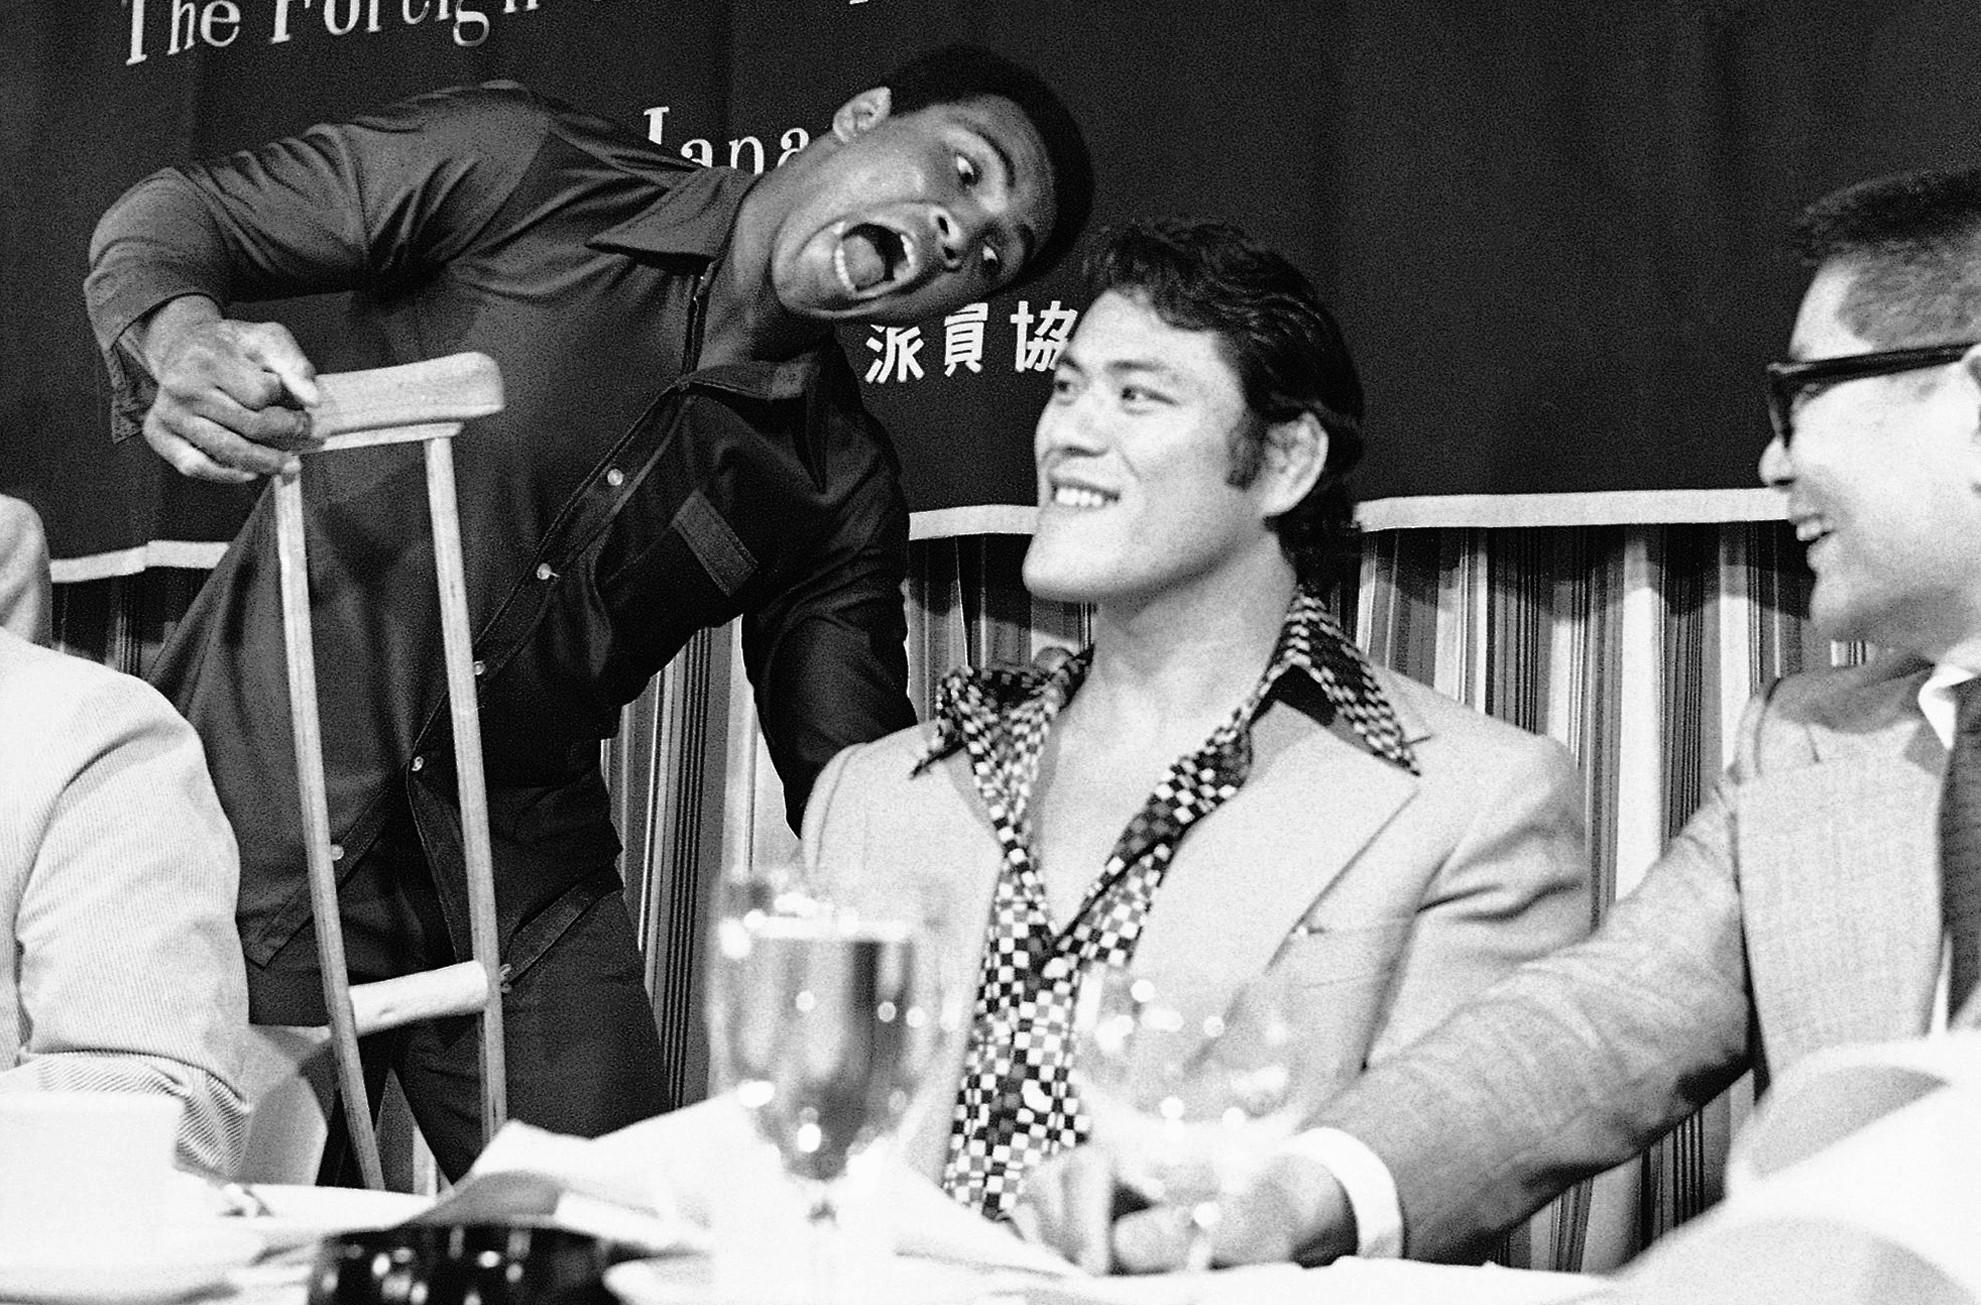 Muhammad Ali re-gifts a crutch to Antonio Inoki.